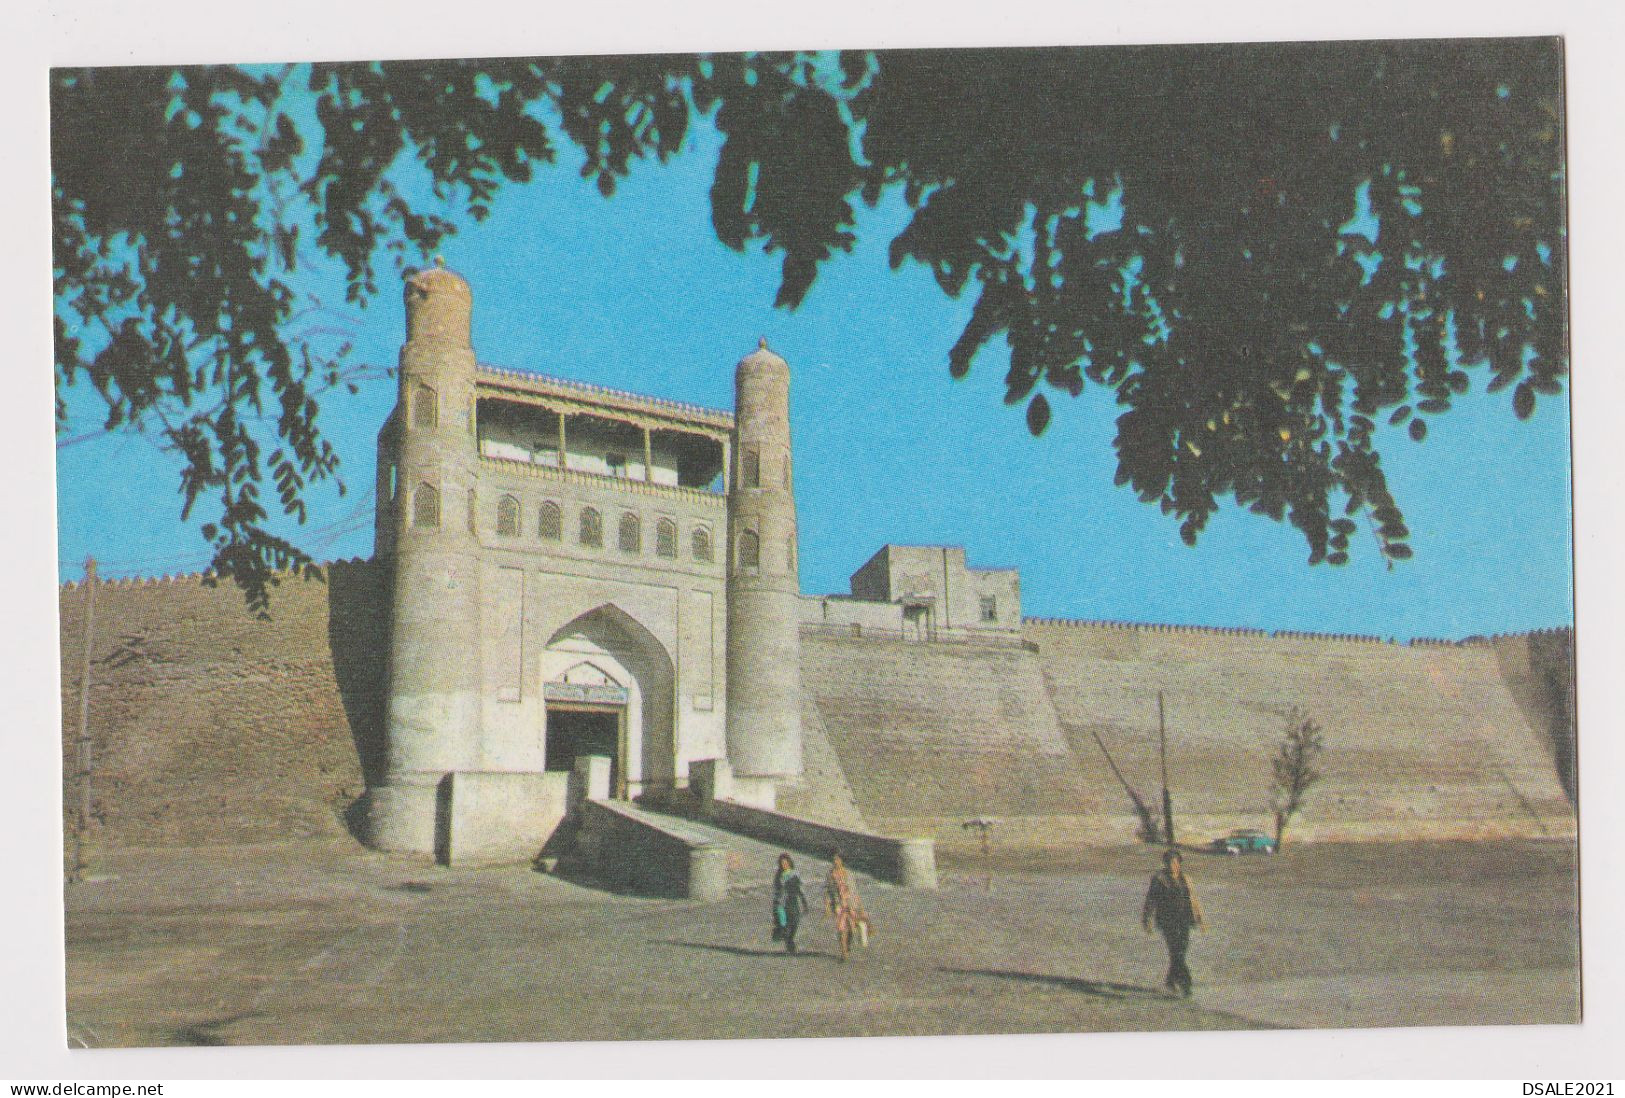 Uzbekistan Bukhara The Ark Entrance Gates View, Vintage 1970s Soviet Russia USSR Photo Postcard RPPc AK (42450) - Uzbekistan